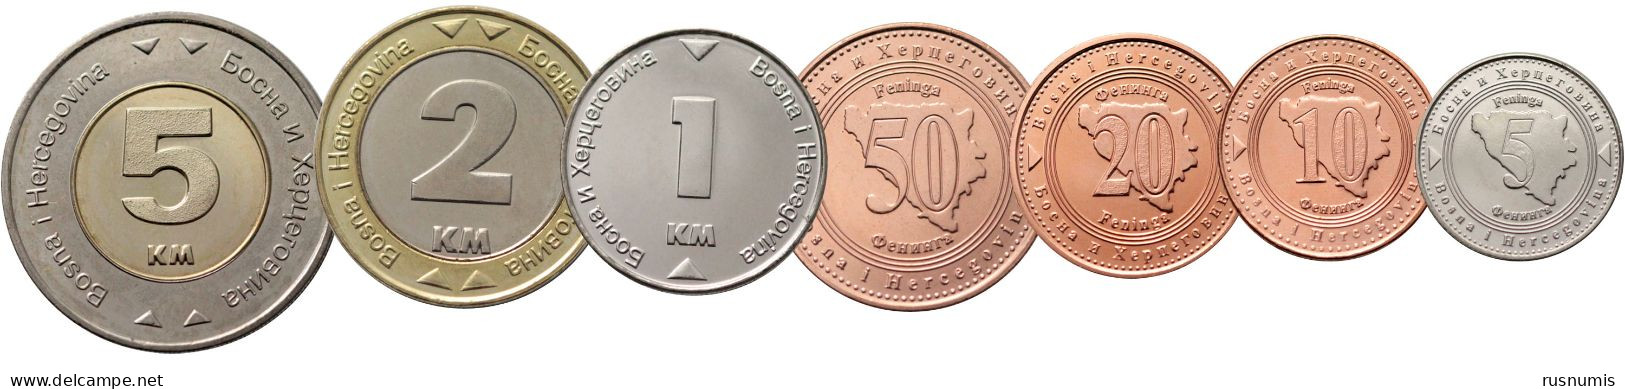 BOSNIA AND HERZEGOVINA 7 COINS SET 5 10 20 50 FENINGA 1 2 5 KM MARAKA BIMETAL 2009 2021 UNC - Bosnia Y Herzegovina